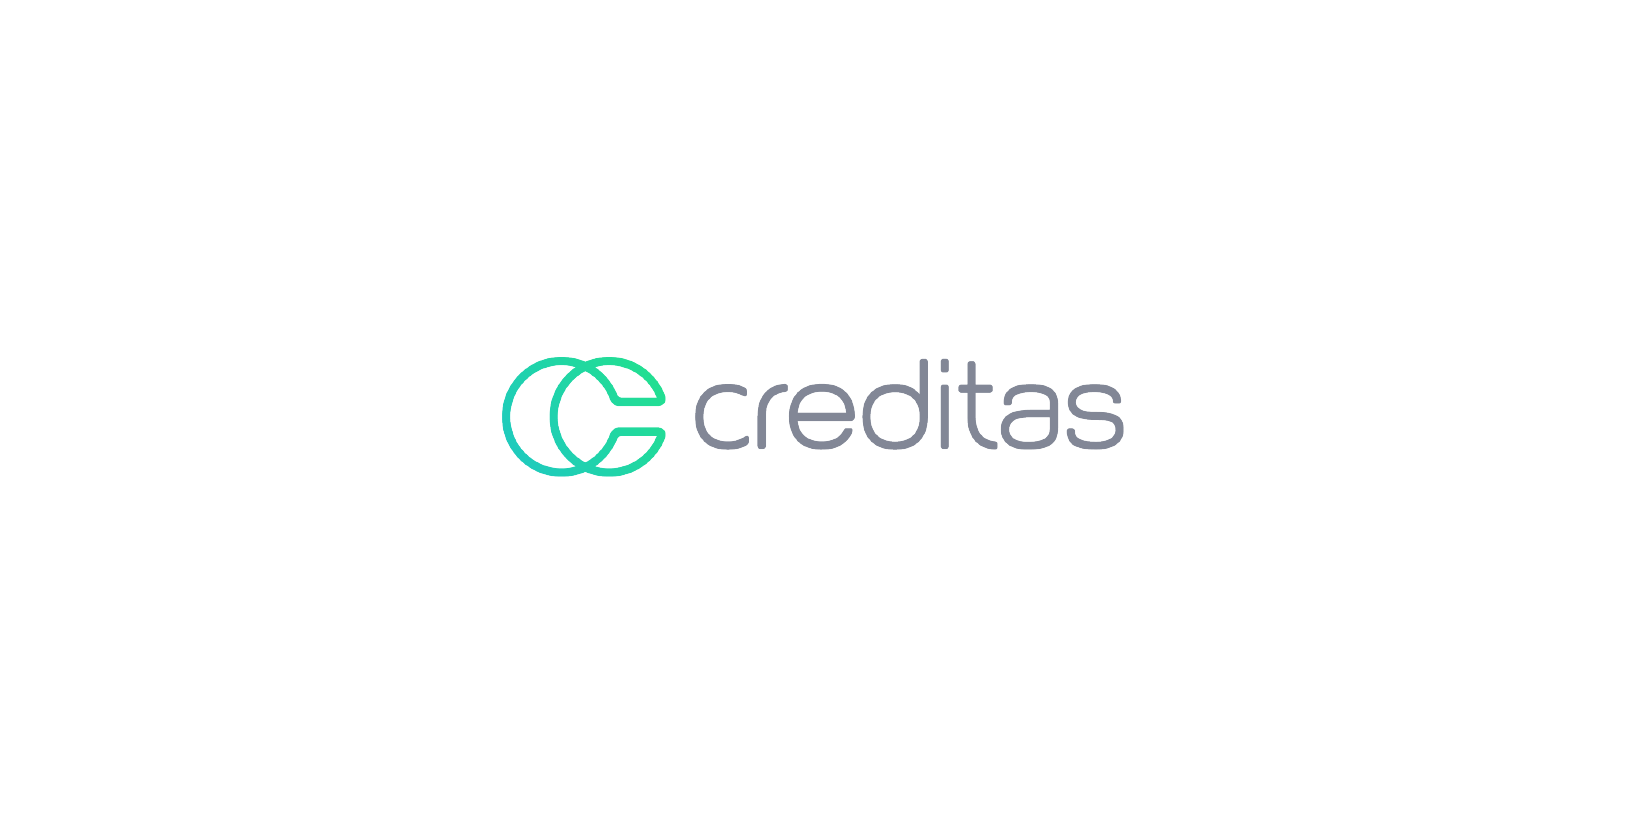 Vision Fund investment portfolio company Creditas's logo